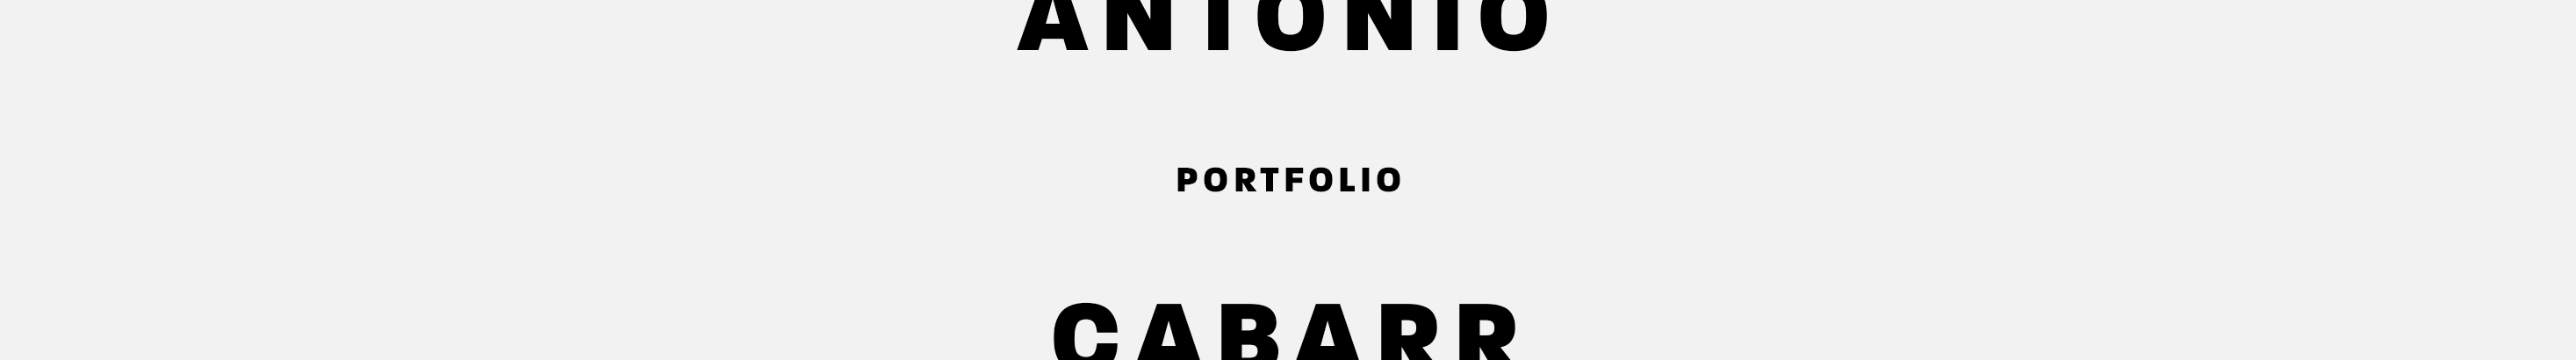 Antonio Cabarr's profile banner